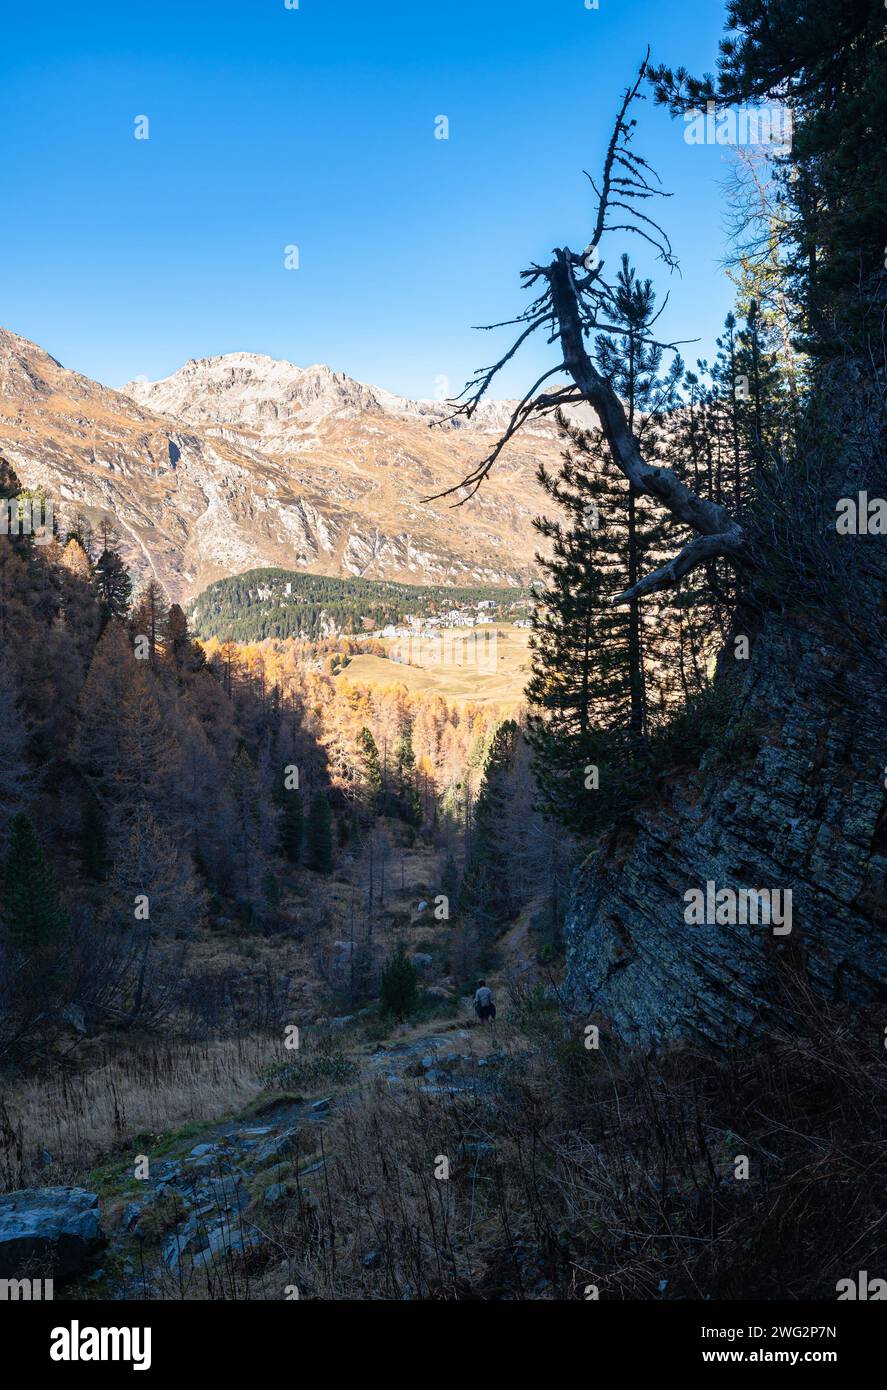 Dramatic landscape image of an overhanging dead tree in a dark gorge in Maloja region, Graubünden canton, Switzerland. Stock Photo